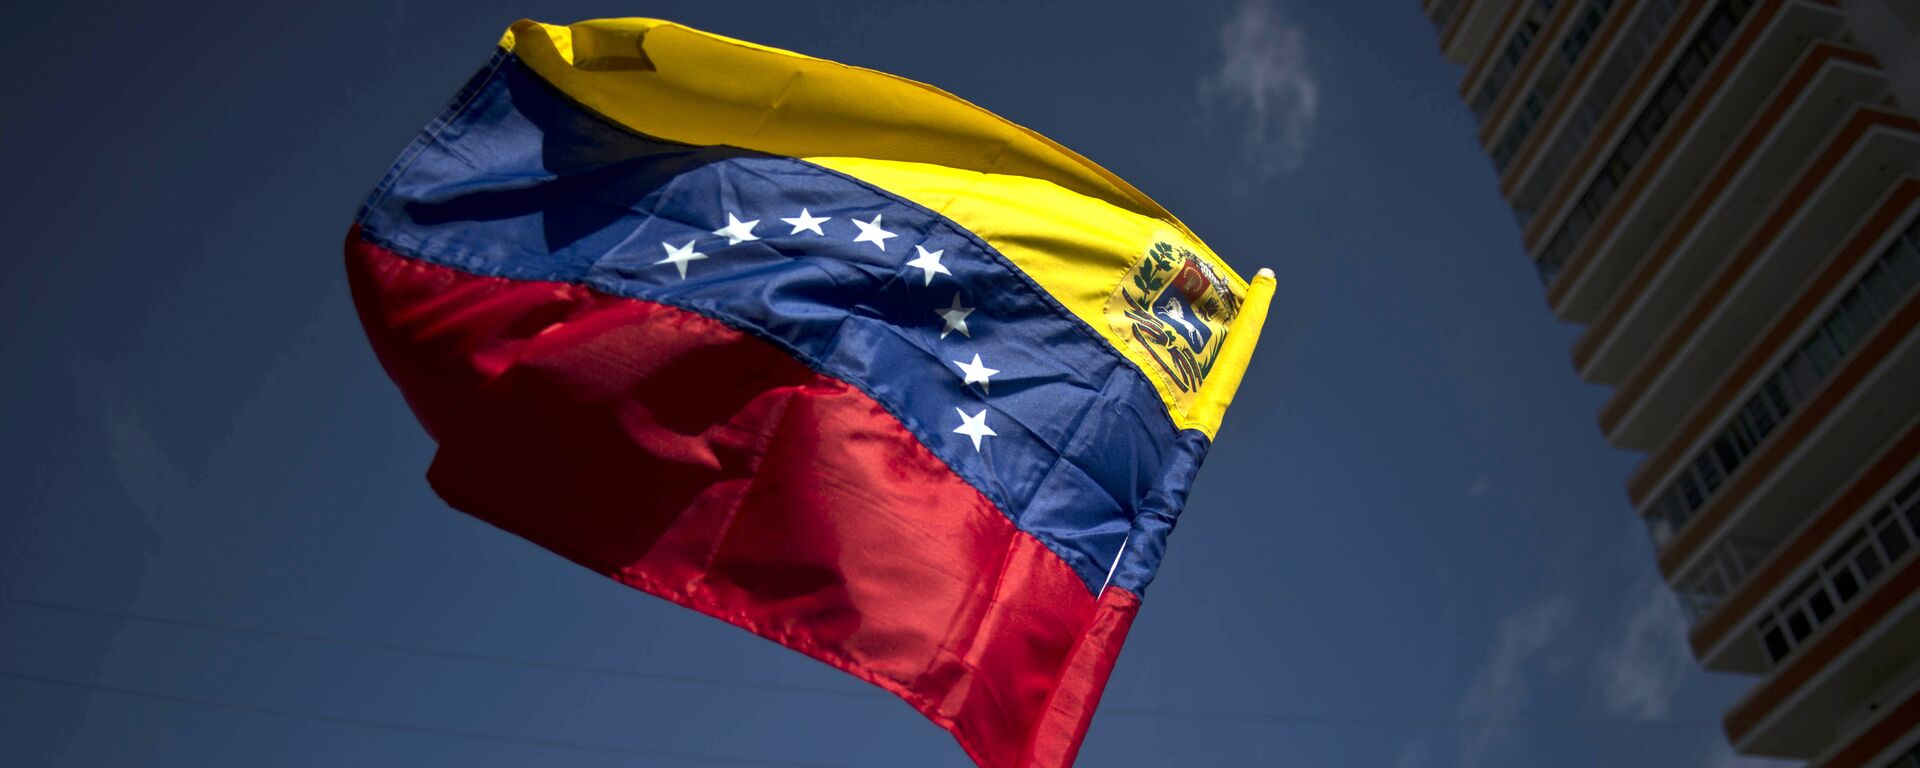 Bandera de Venezuela - Sputnik Mundo, 1920, 25.03.2021